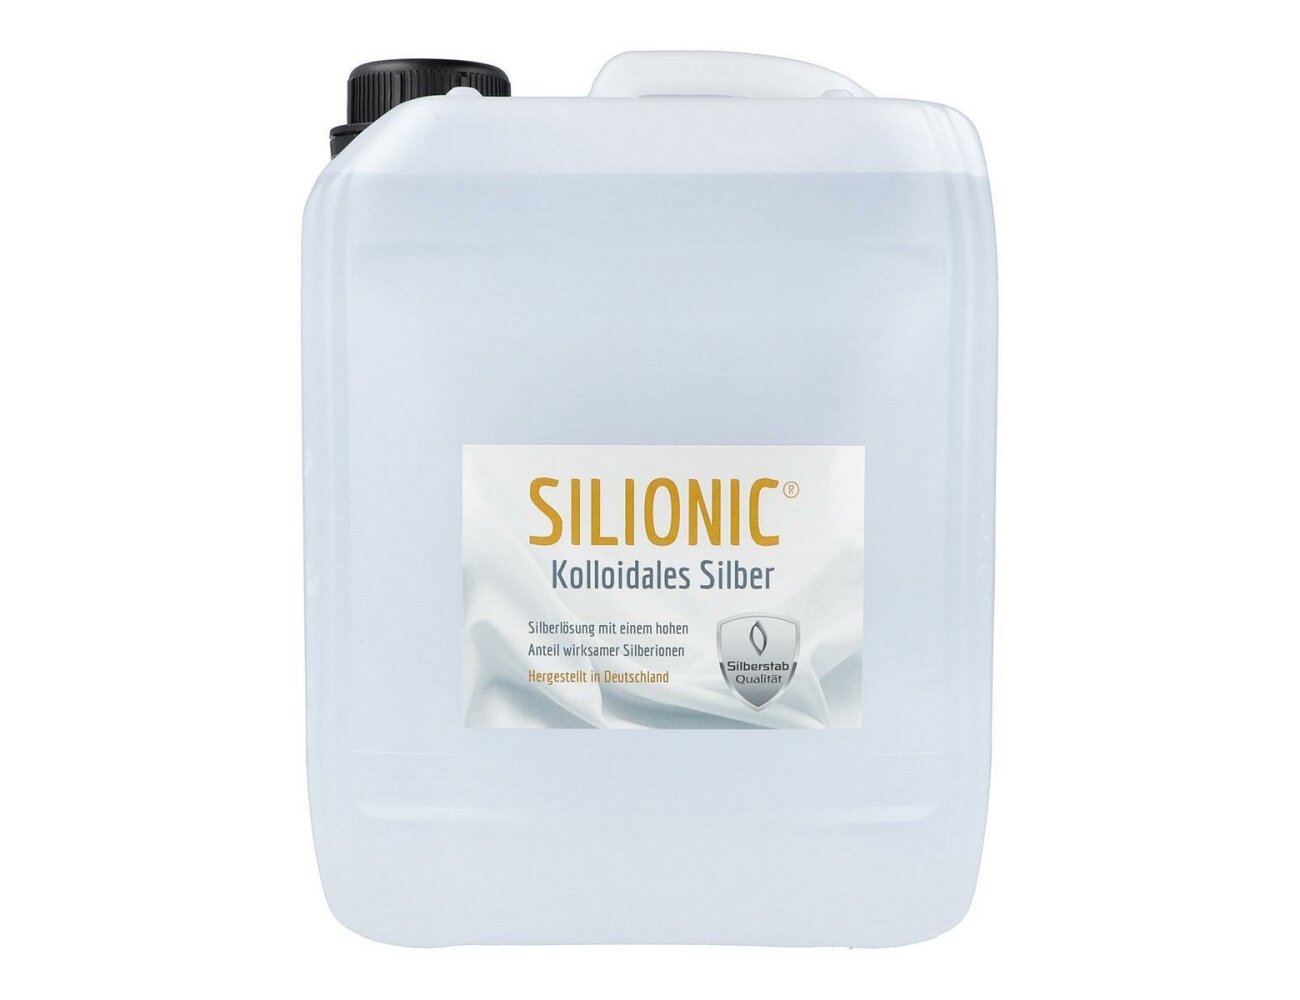 Silionic Kolloidales Silber, 25 ppm, 5 Liter